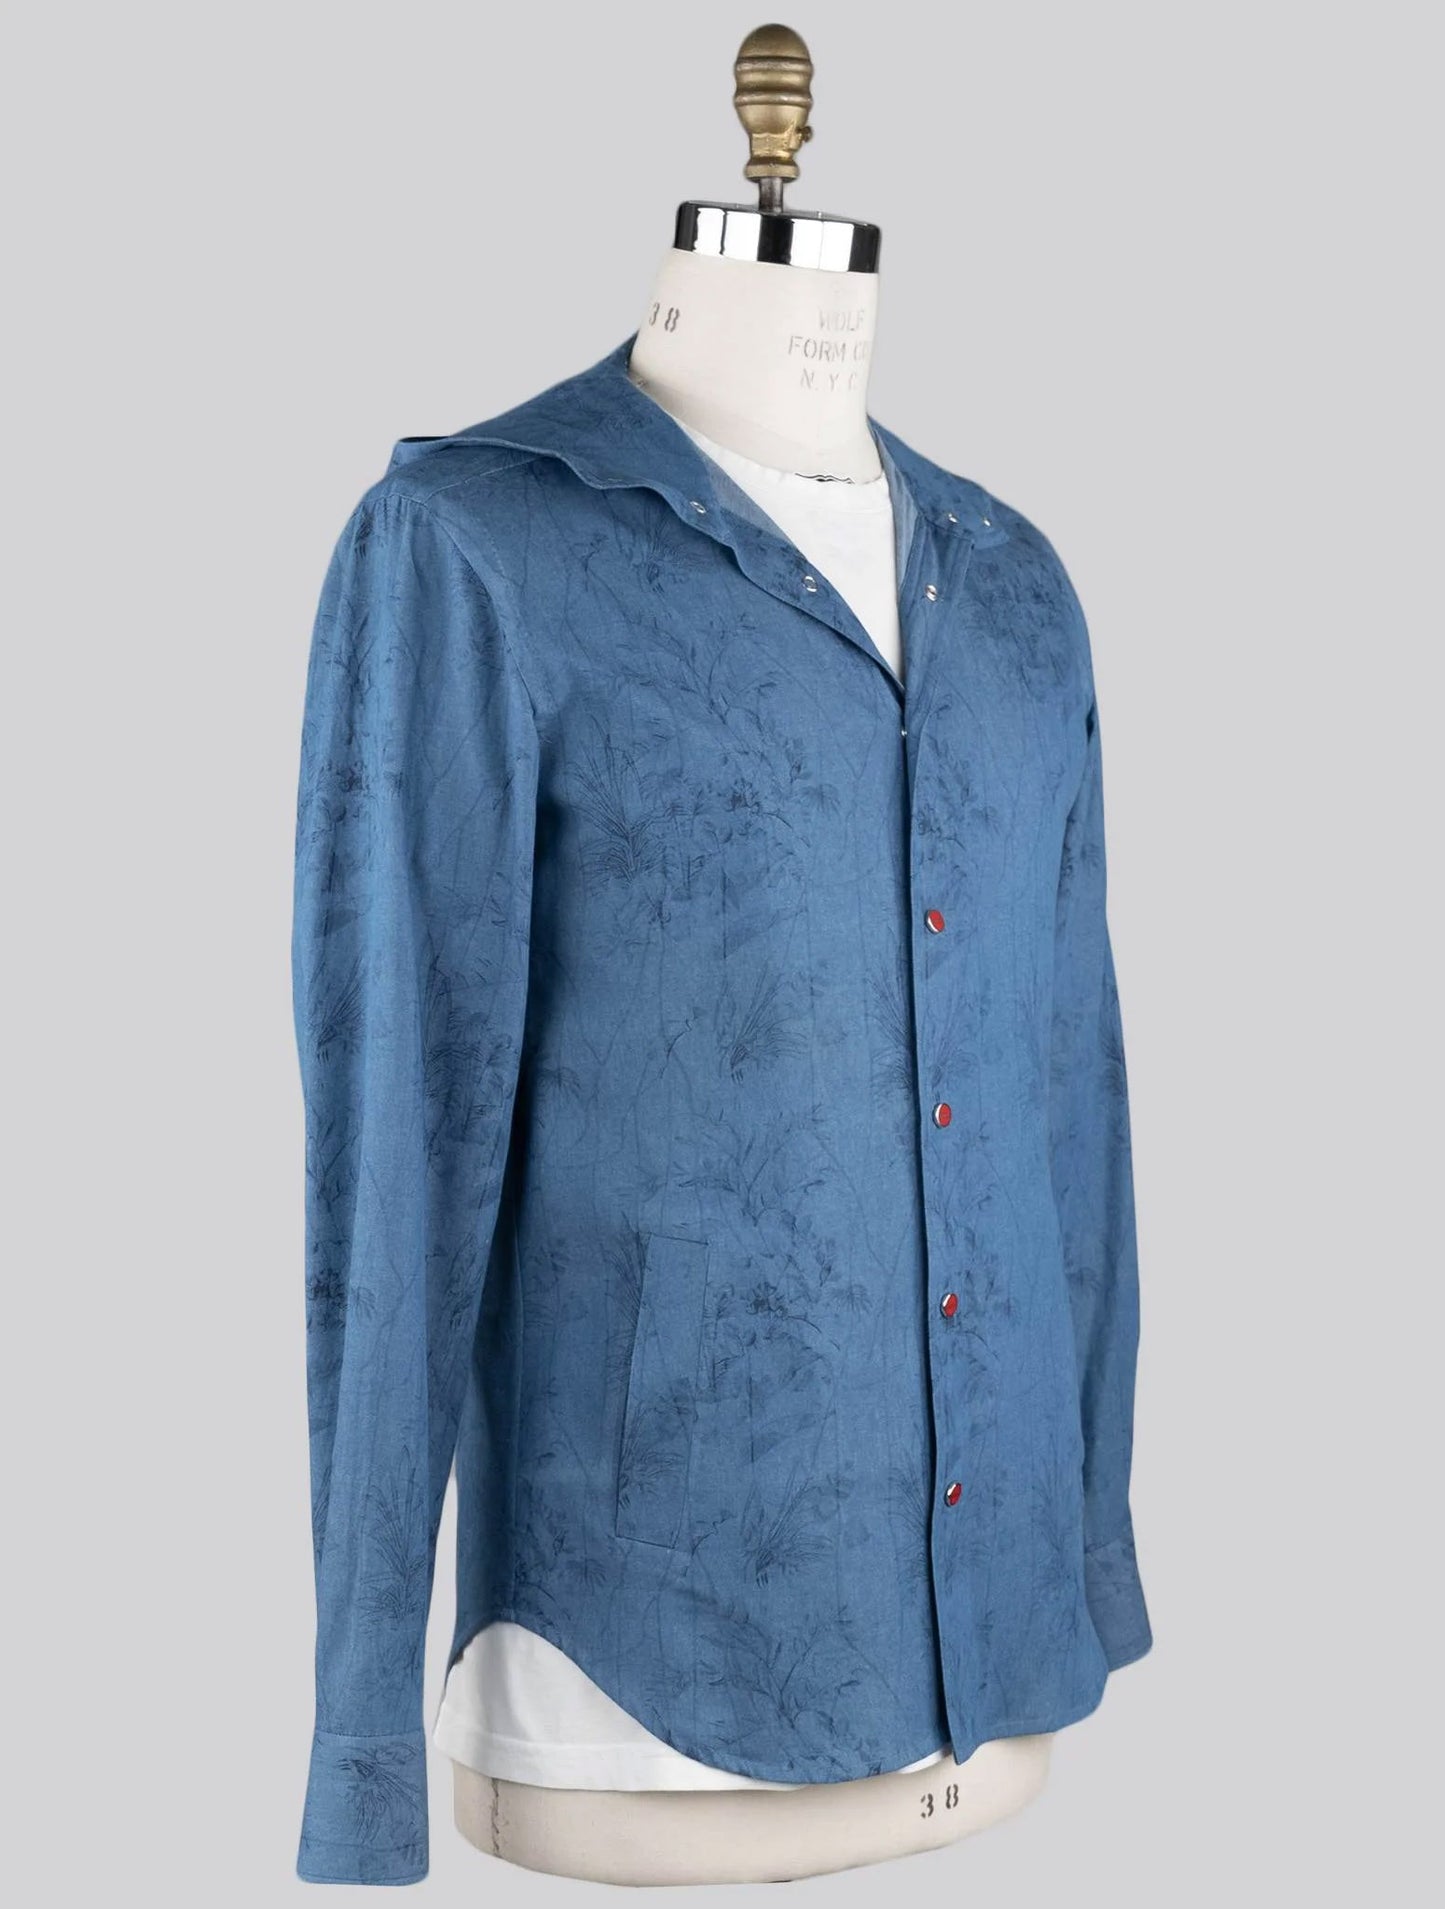 Kiton Matching Outfit-Blaue Mariano und Beige kurze Hosen Trainings anzug